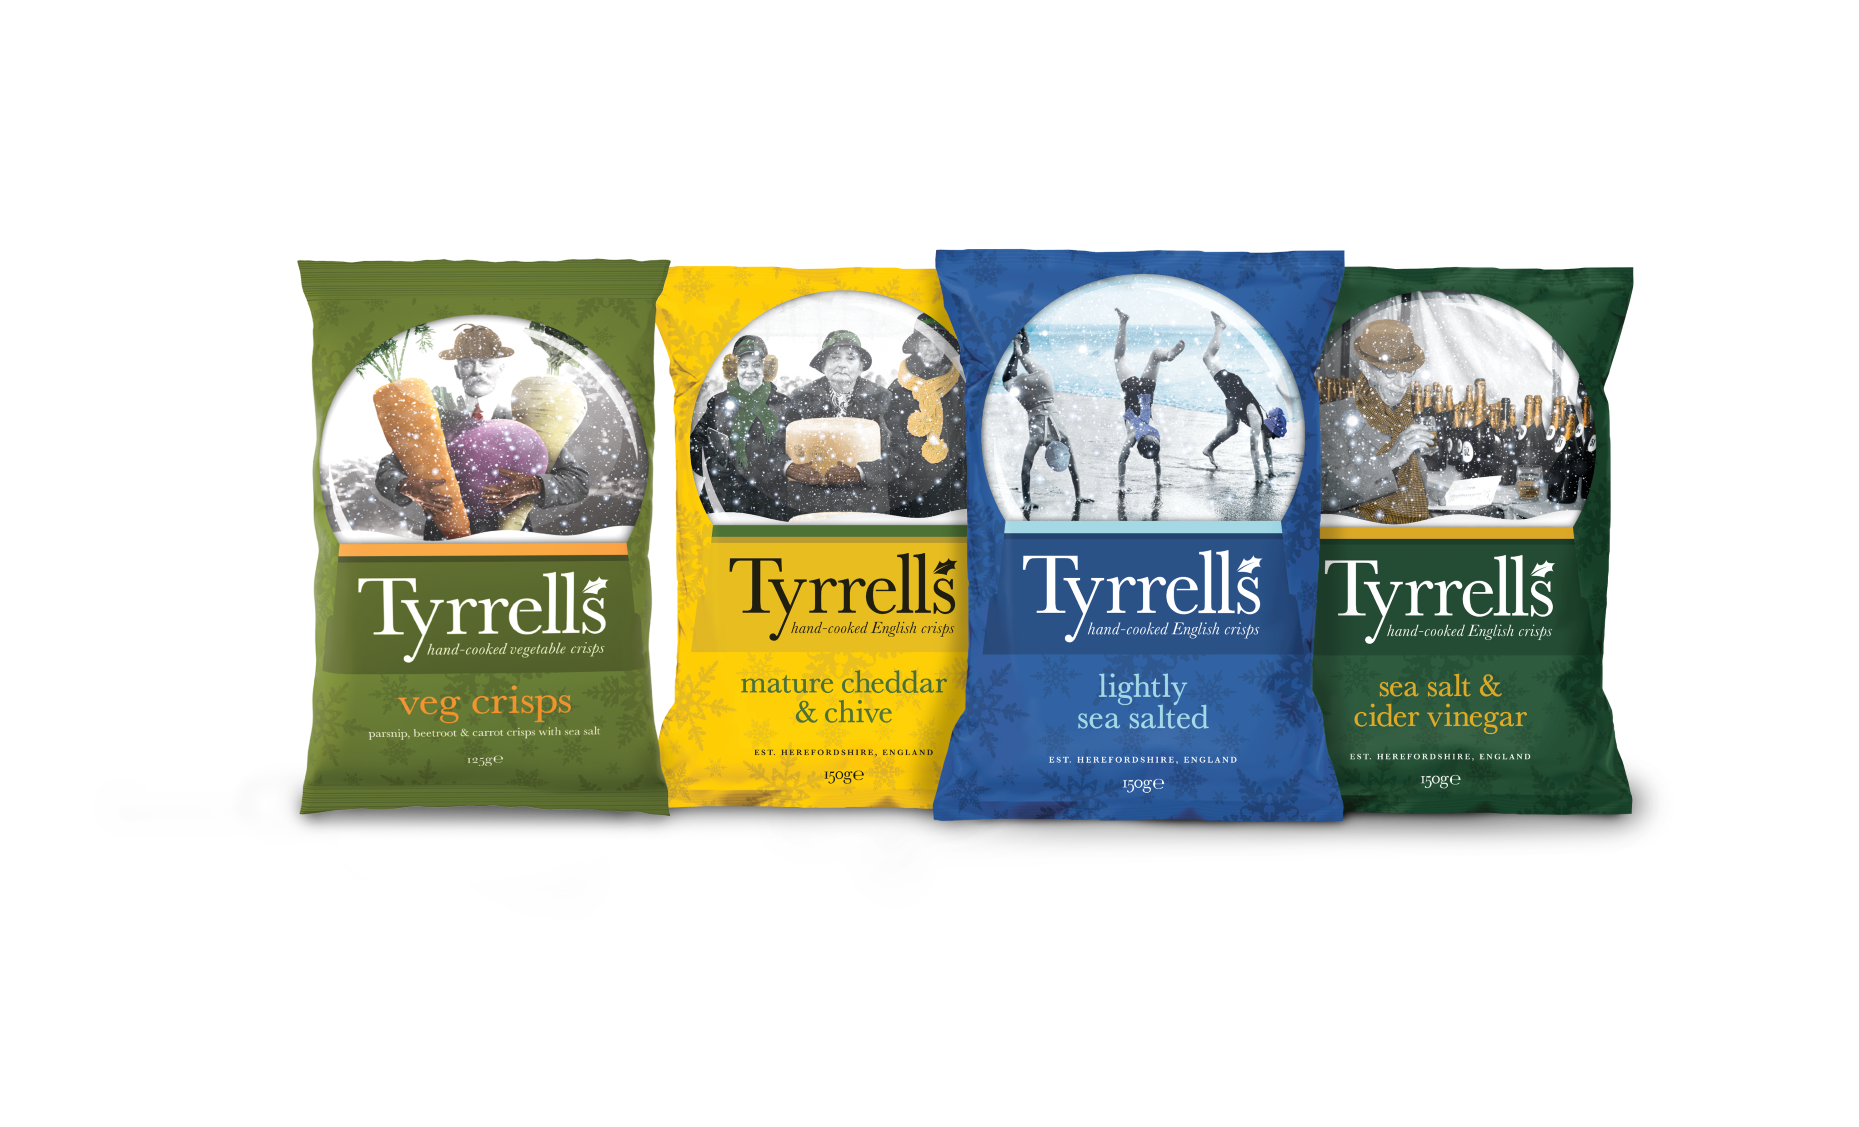 KP Snacks launch festive packaging for Tyrells